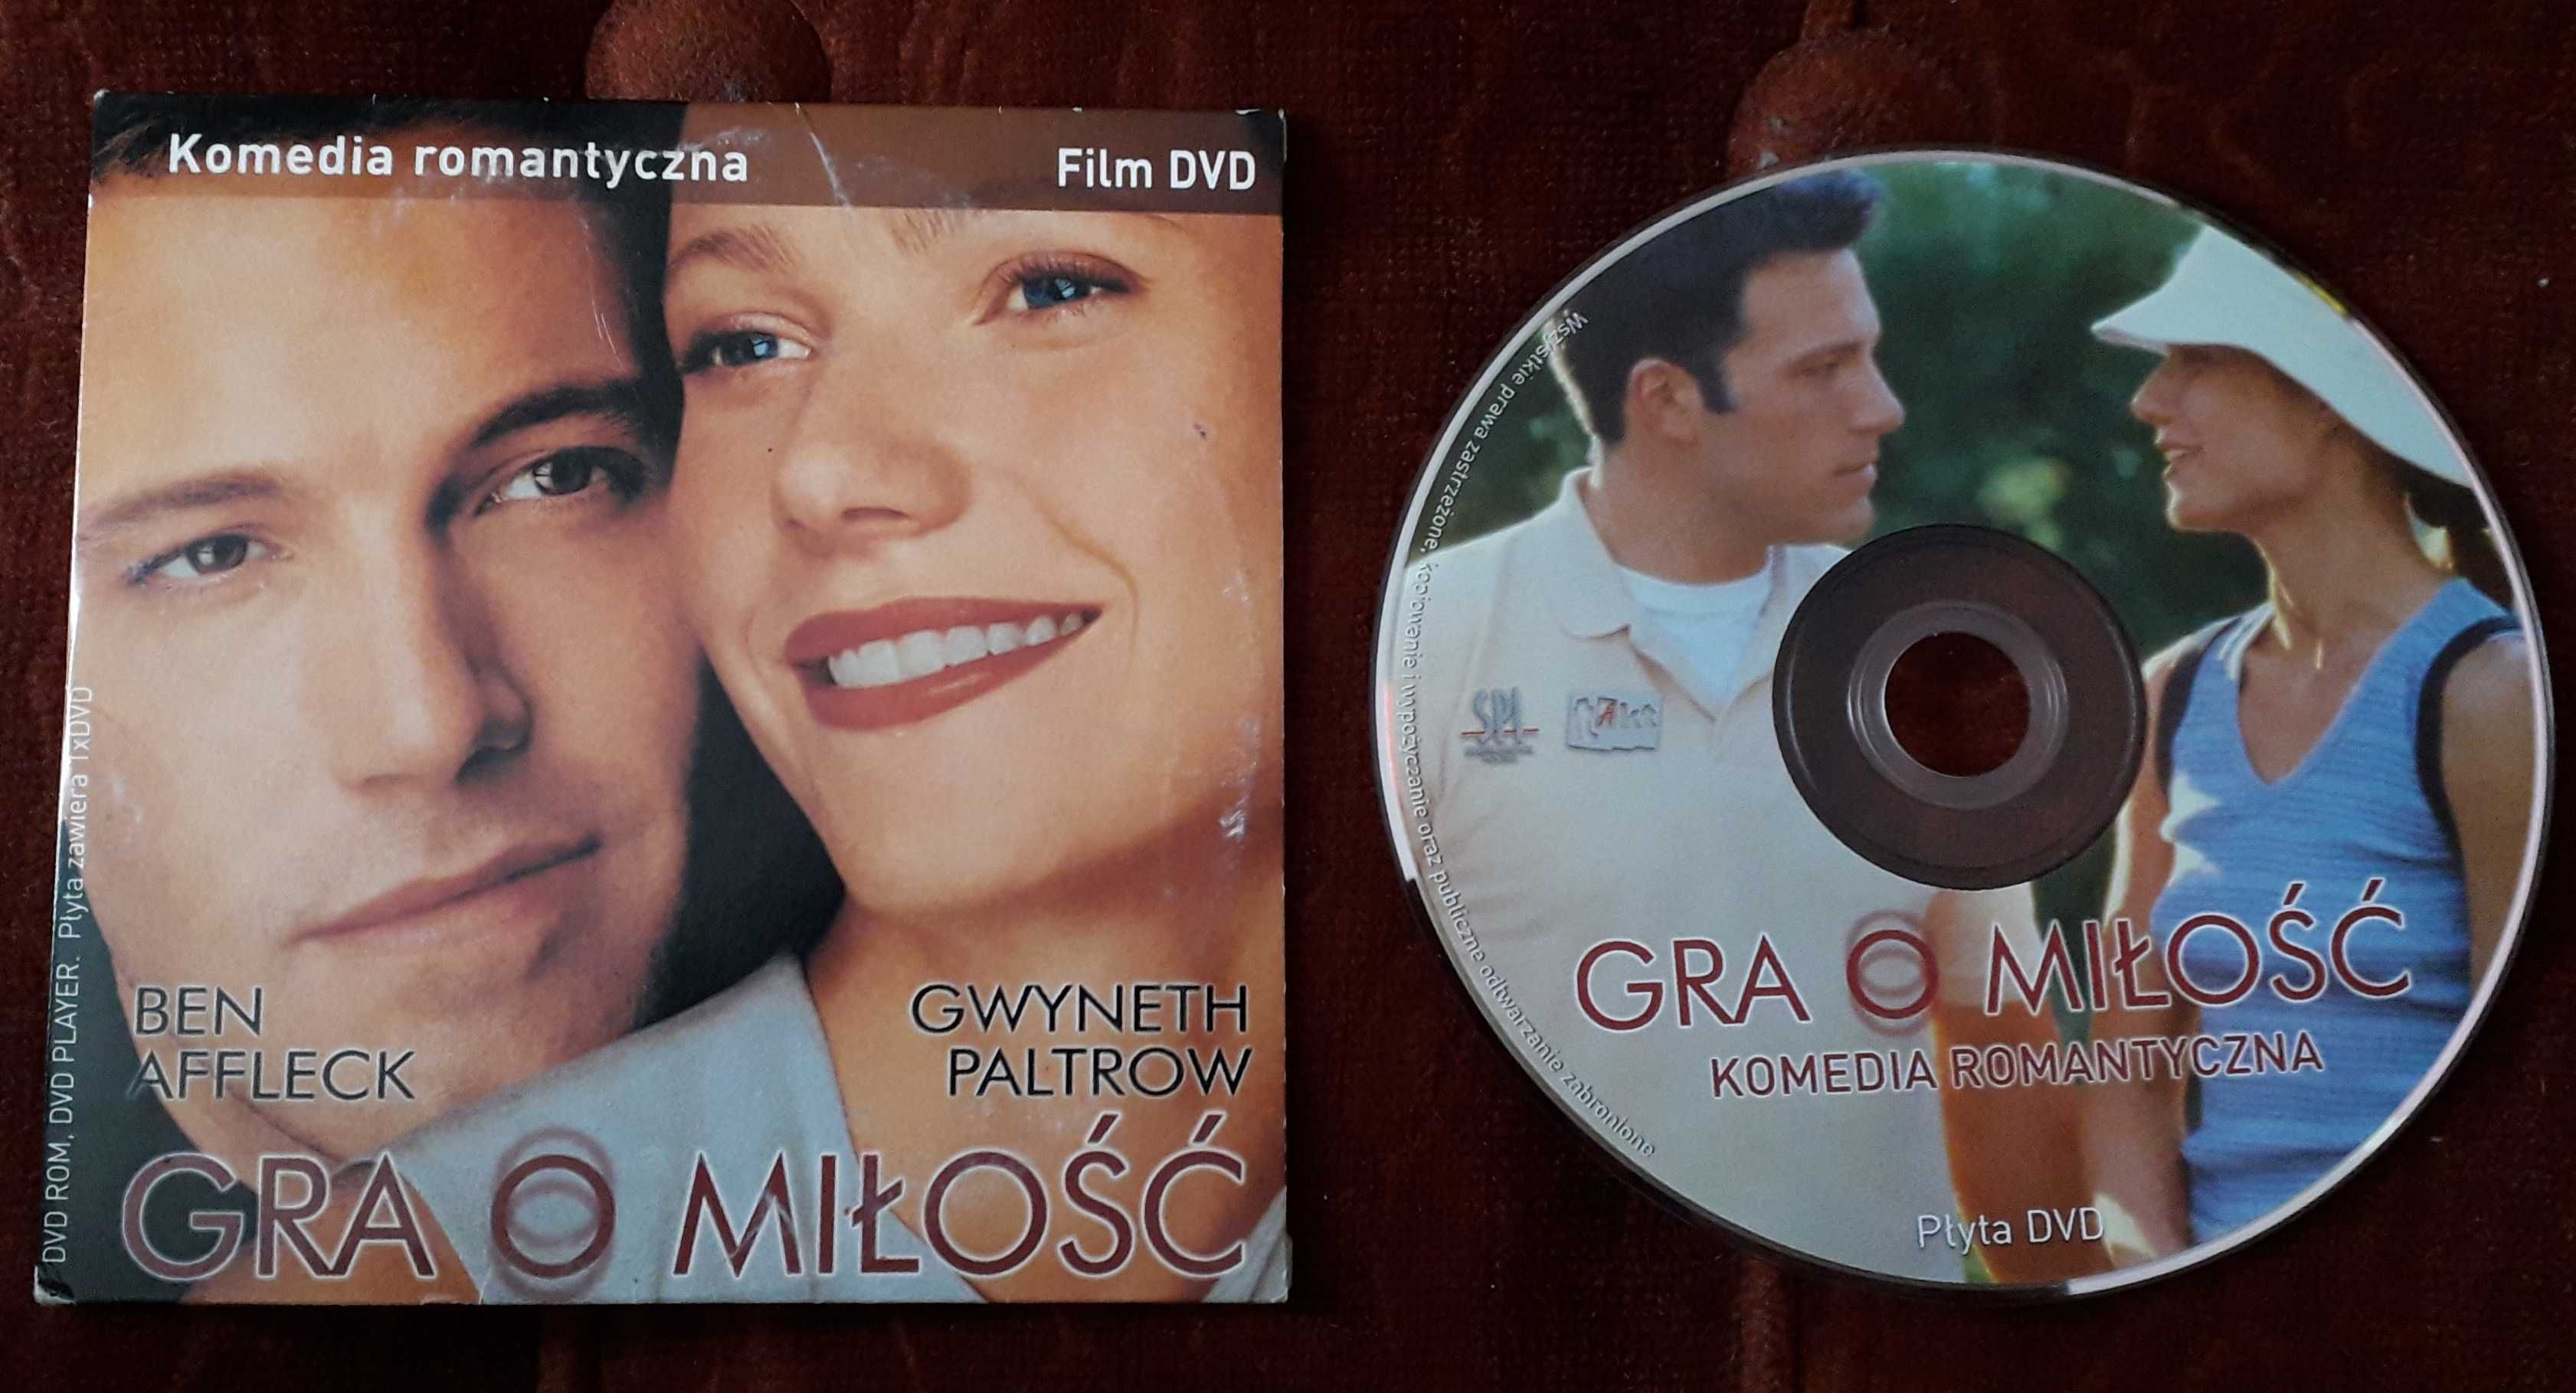 Gra o miłość film DVD B. Affleck, G. Paltrow